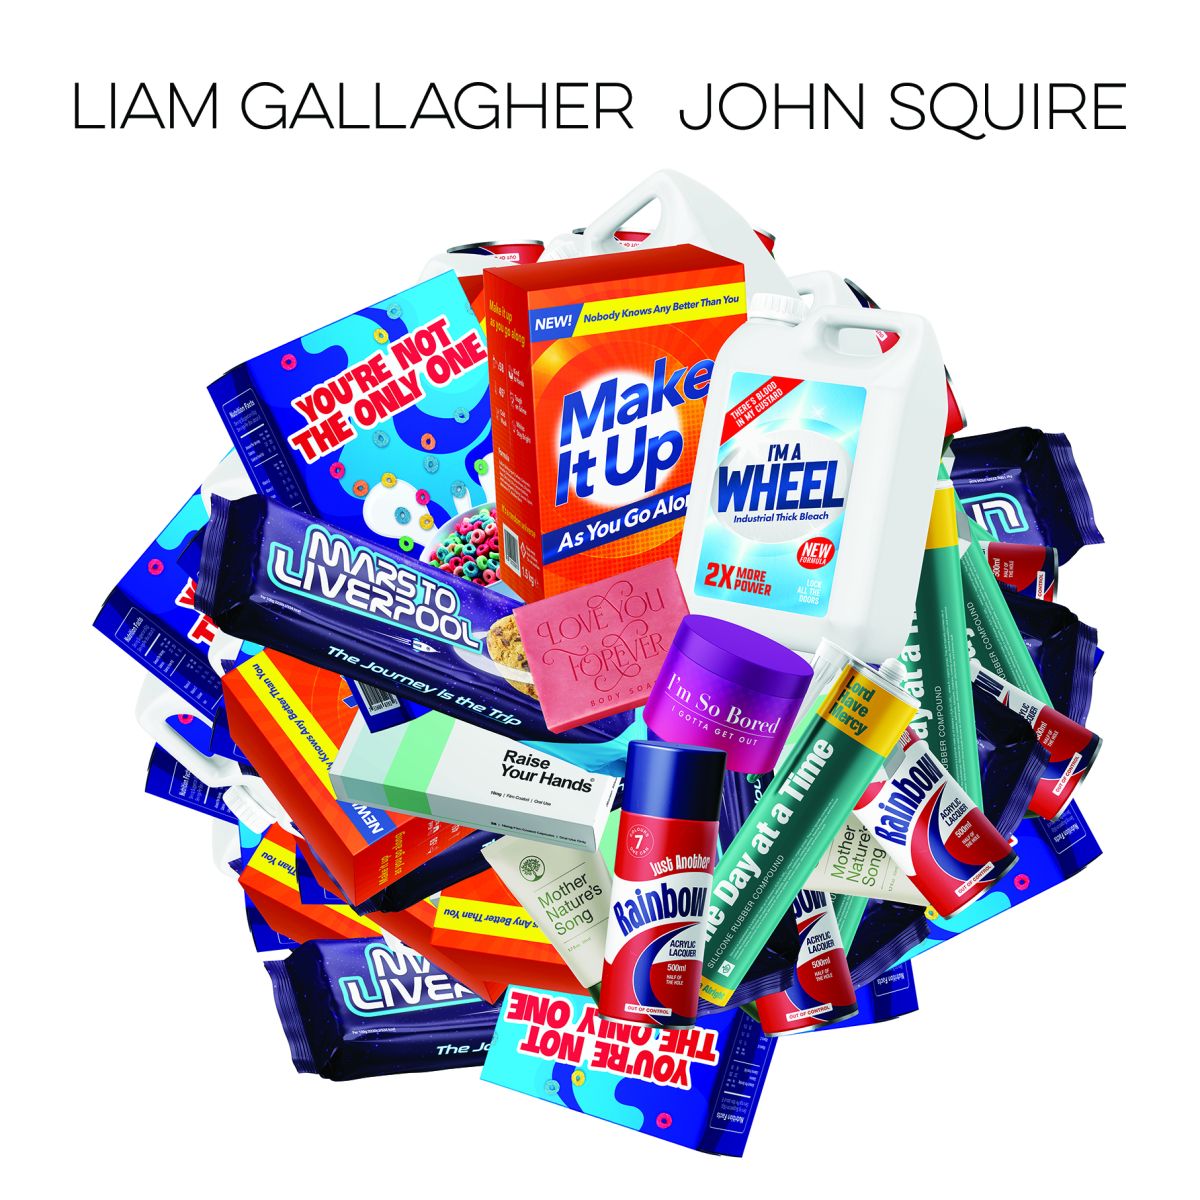 Liam Gallagher and John Squire: Not quite a match made in Britpop Heaven